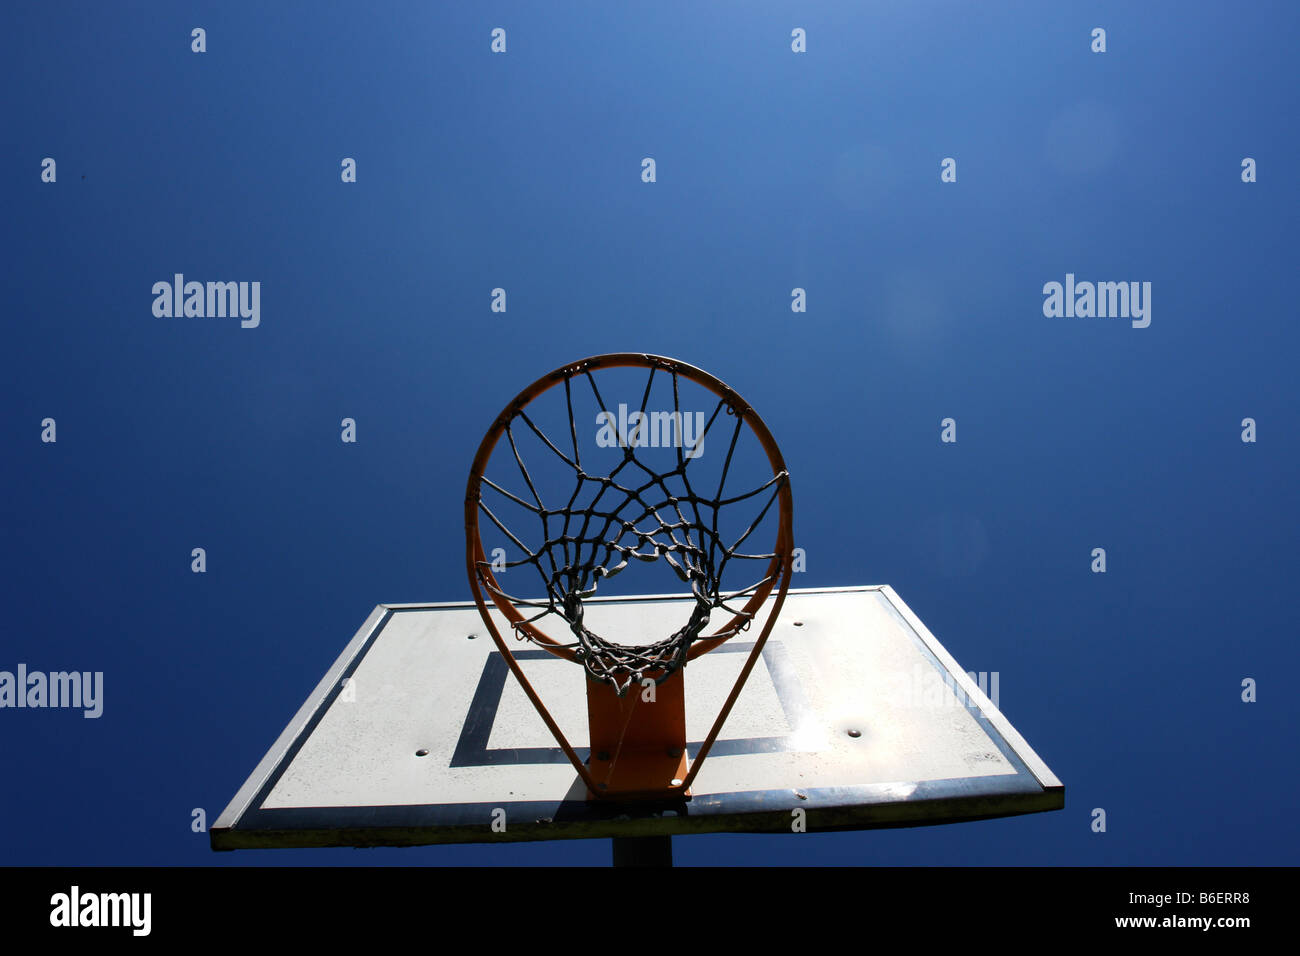 basketball basket against blue sky Stock Photo